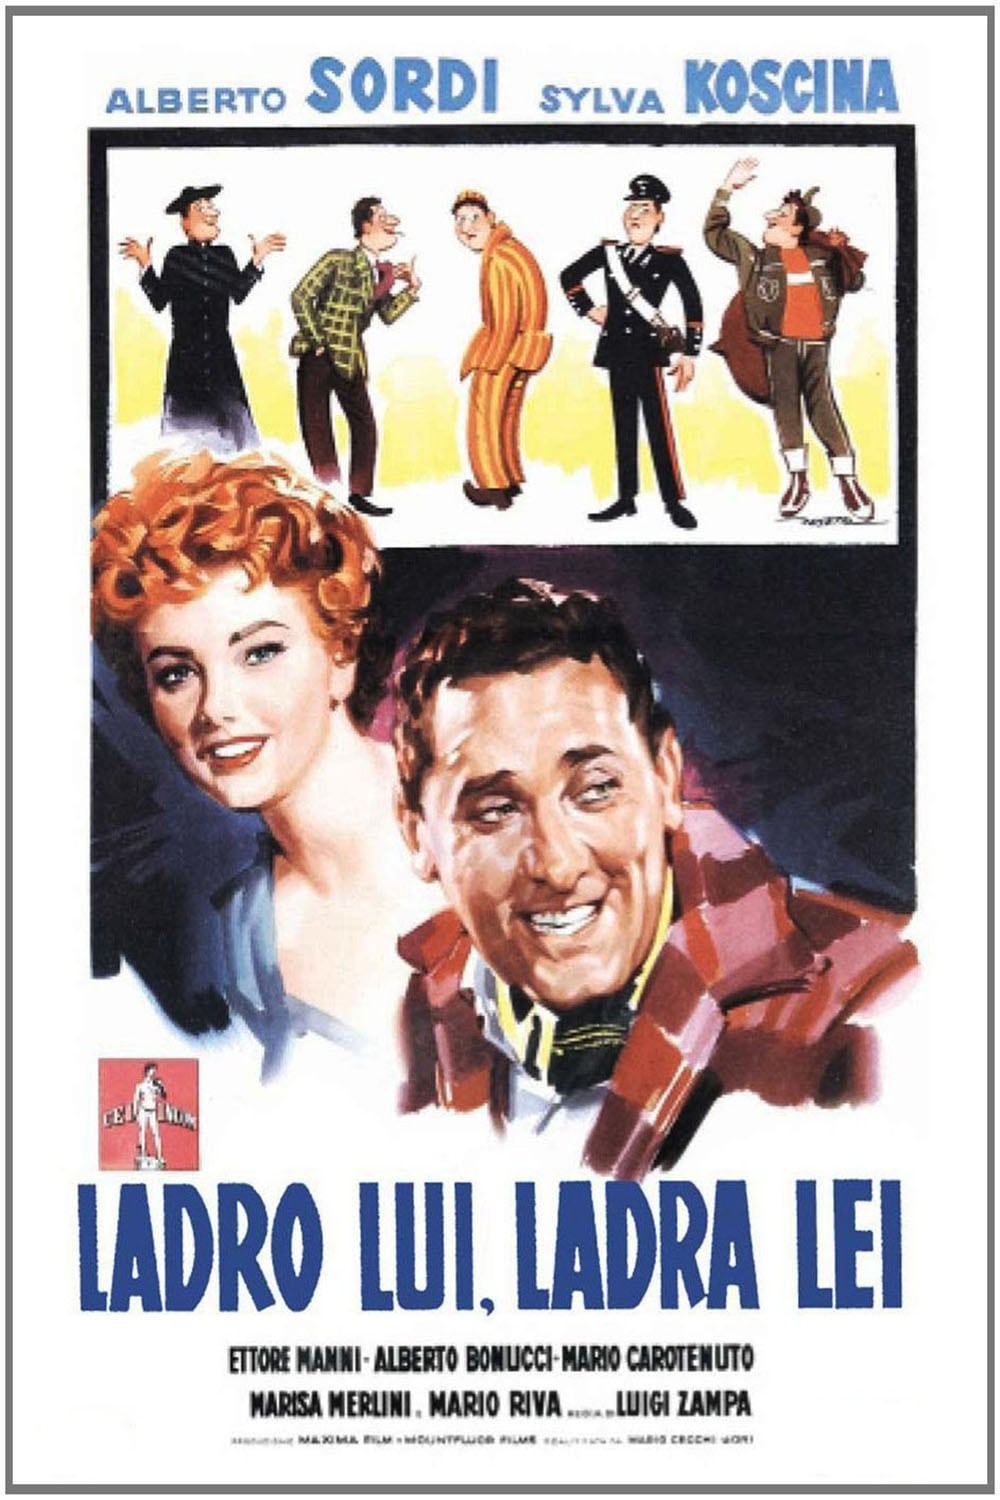 He Thief, She Thief (1958)